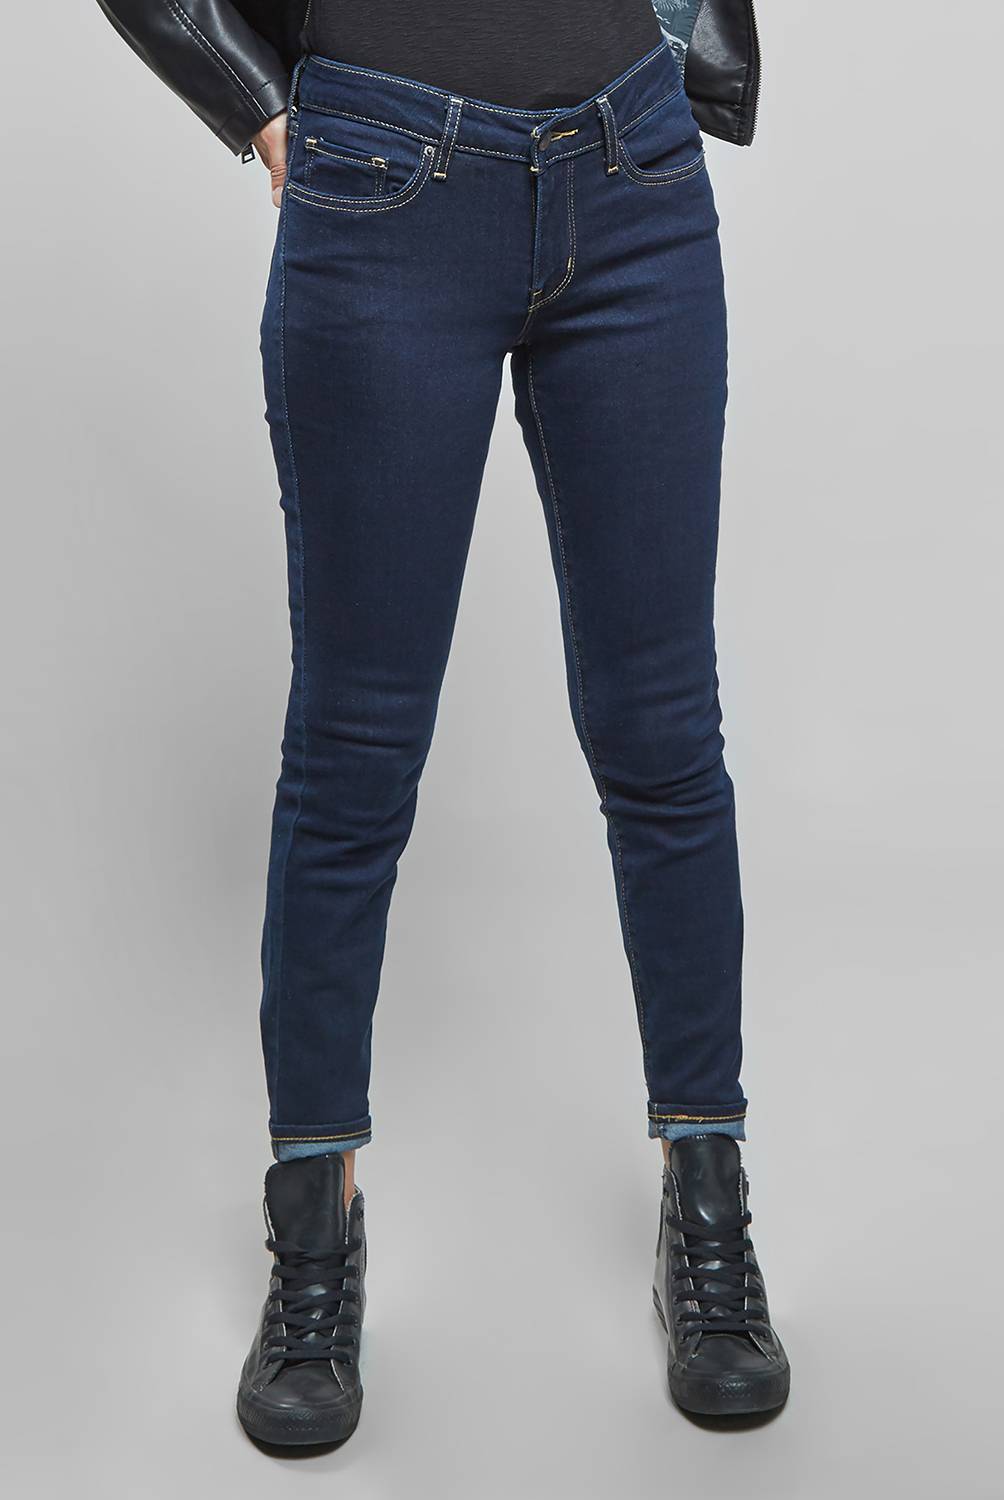 LEVIS - 711 Skinny Jeans